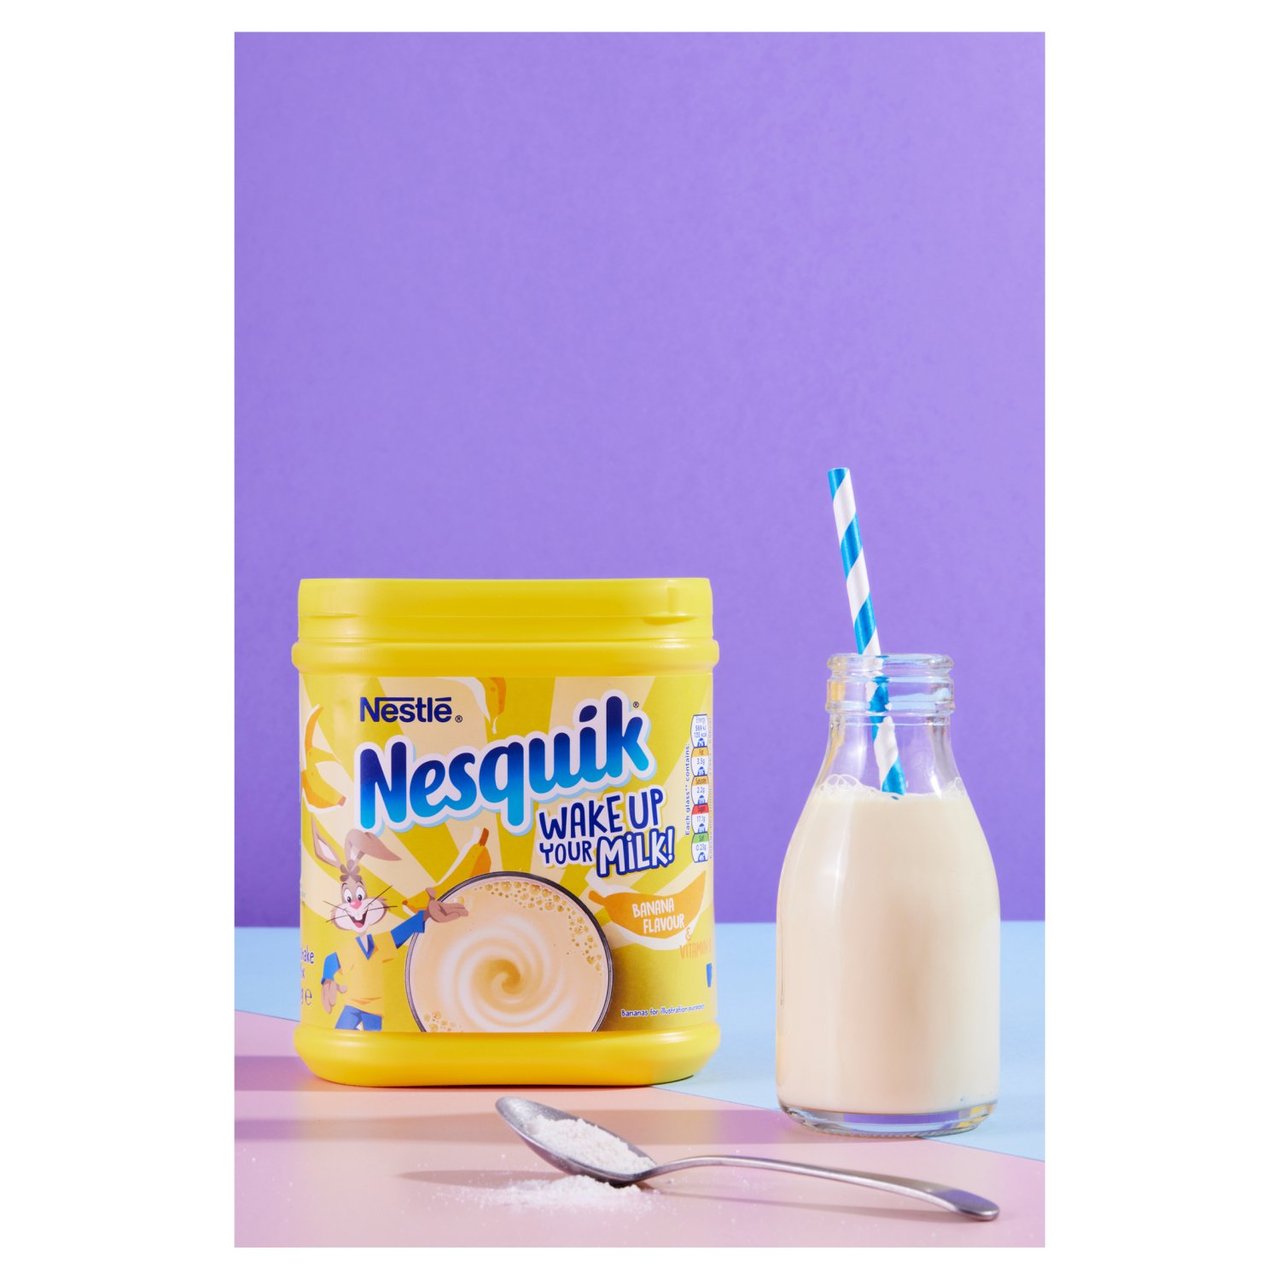 Nesquik Banana Milkshake Powder Tub 500g